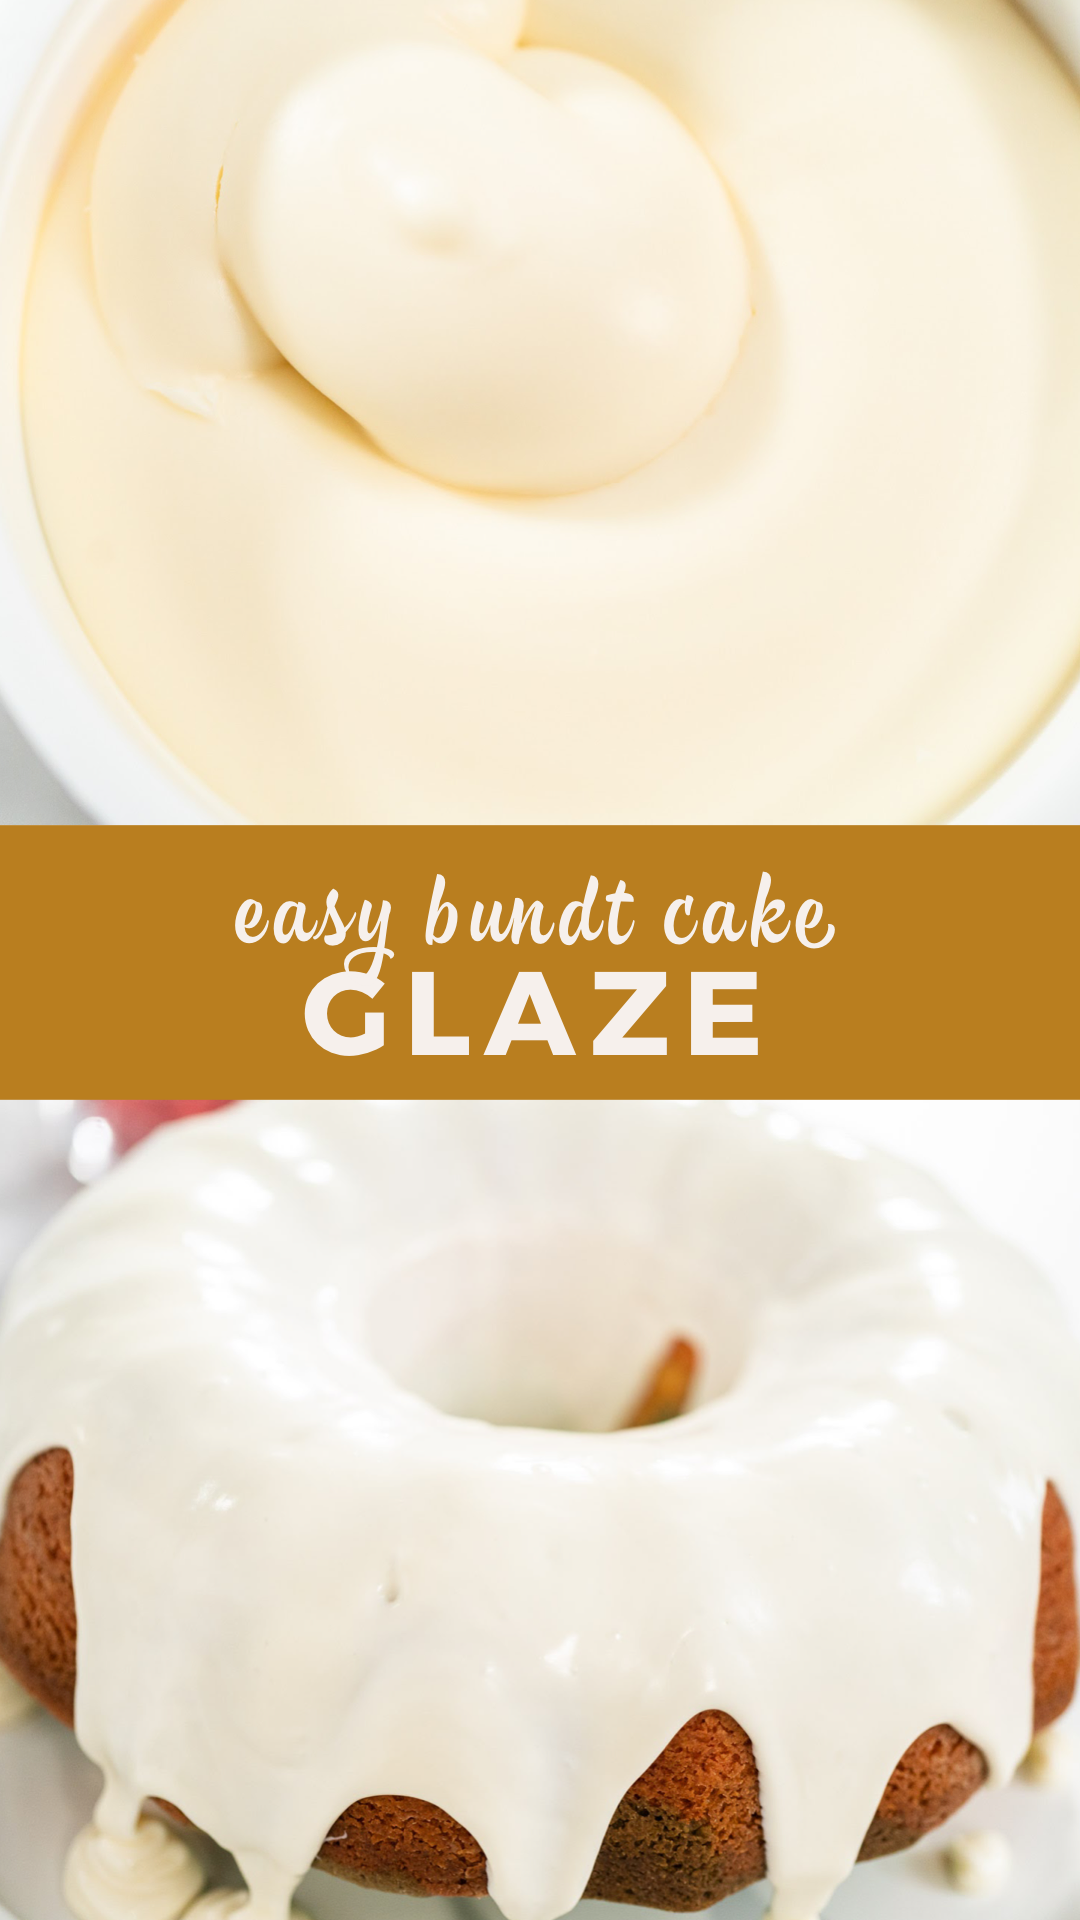 Easy bundt cake glaze